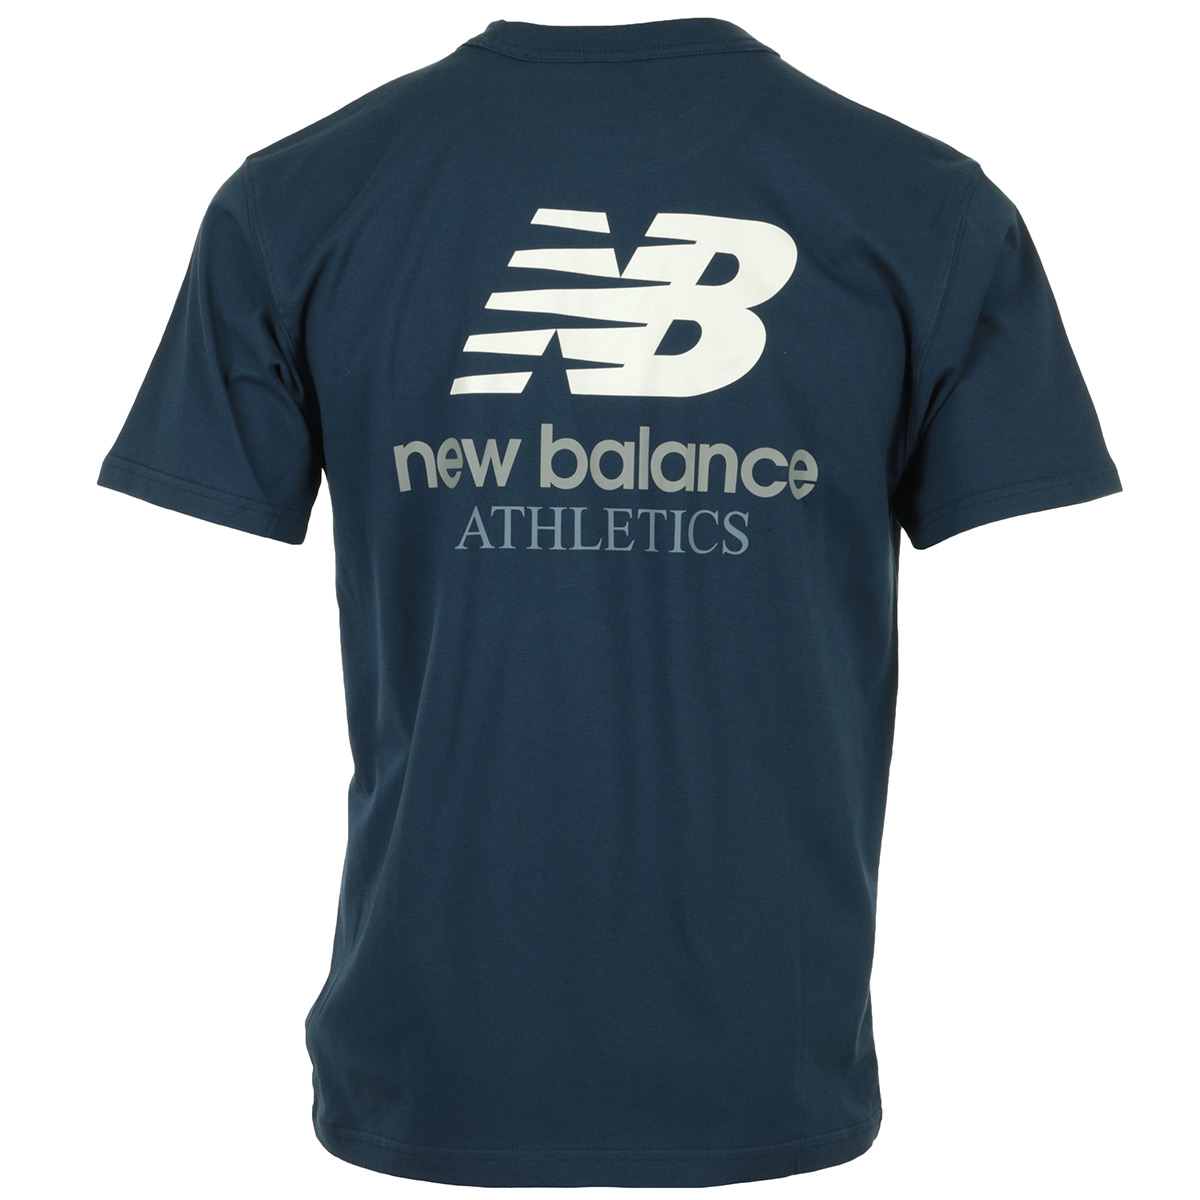 New Balance Athletics Graphics Tee